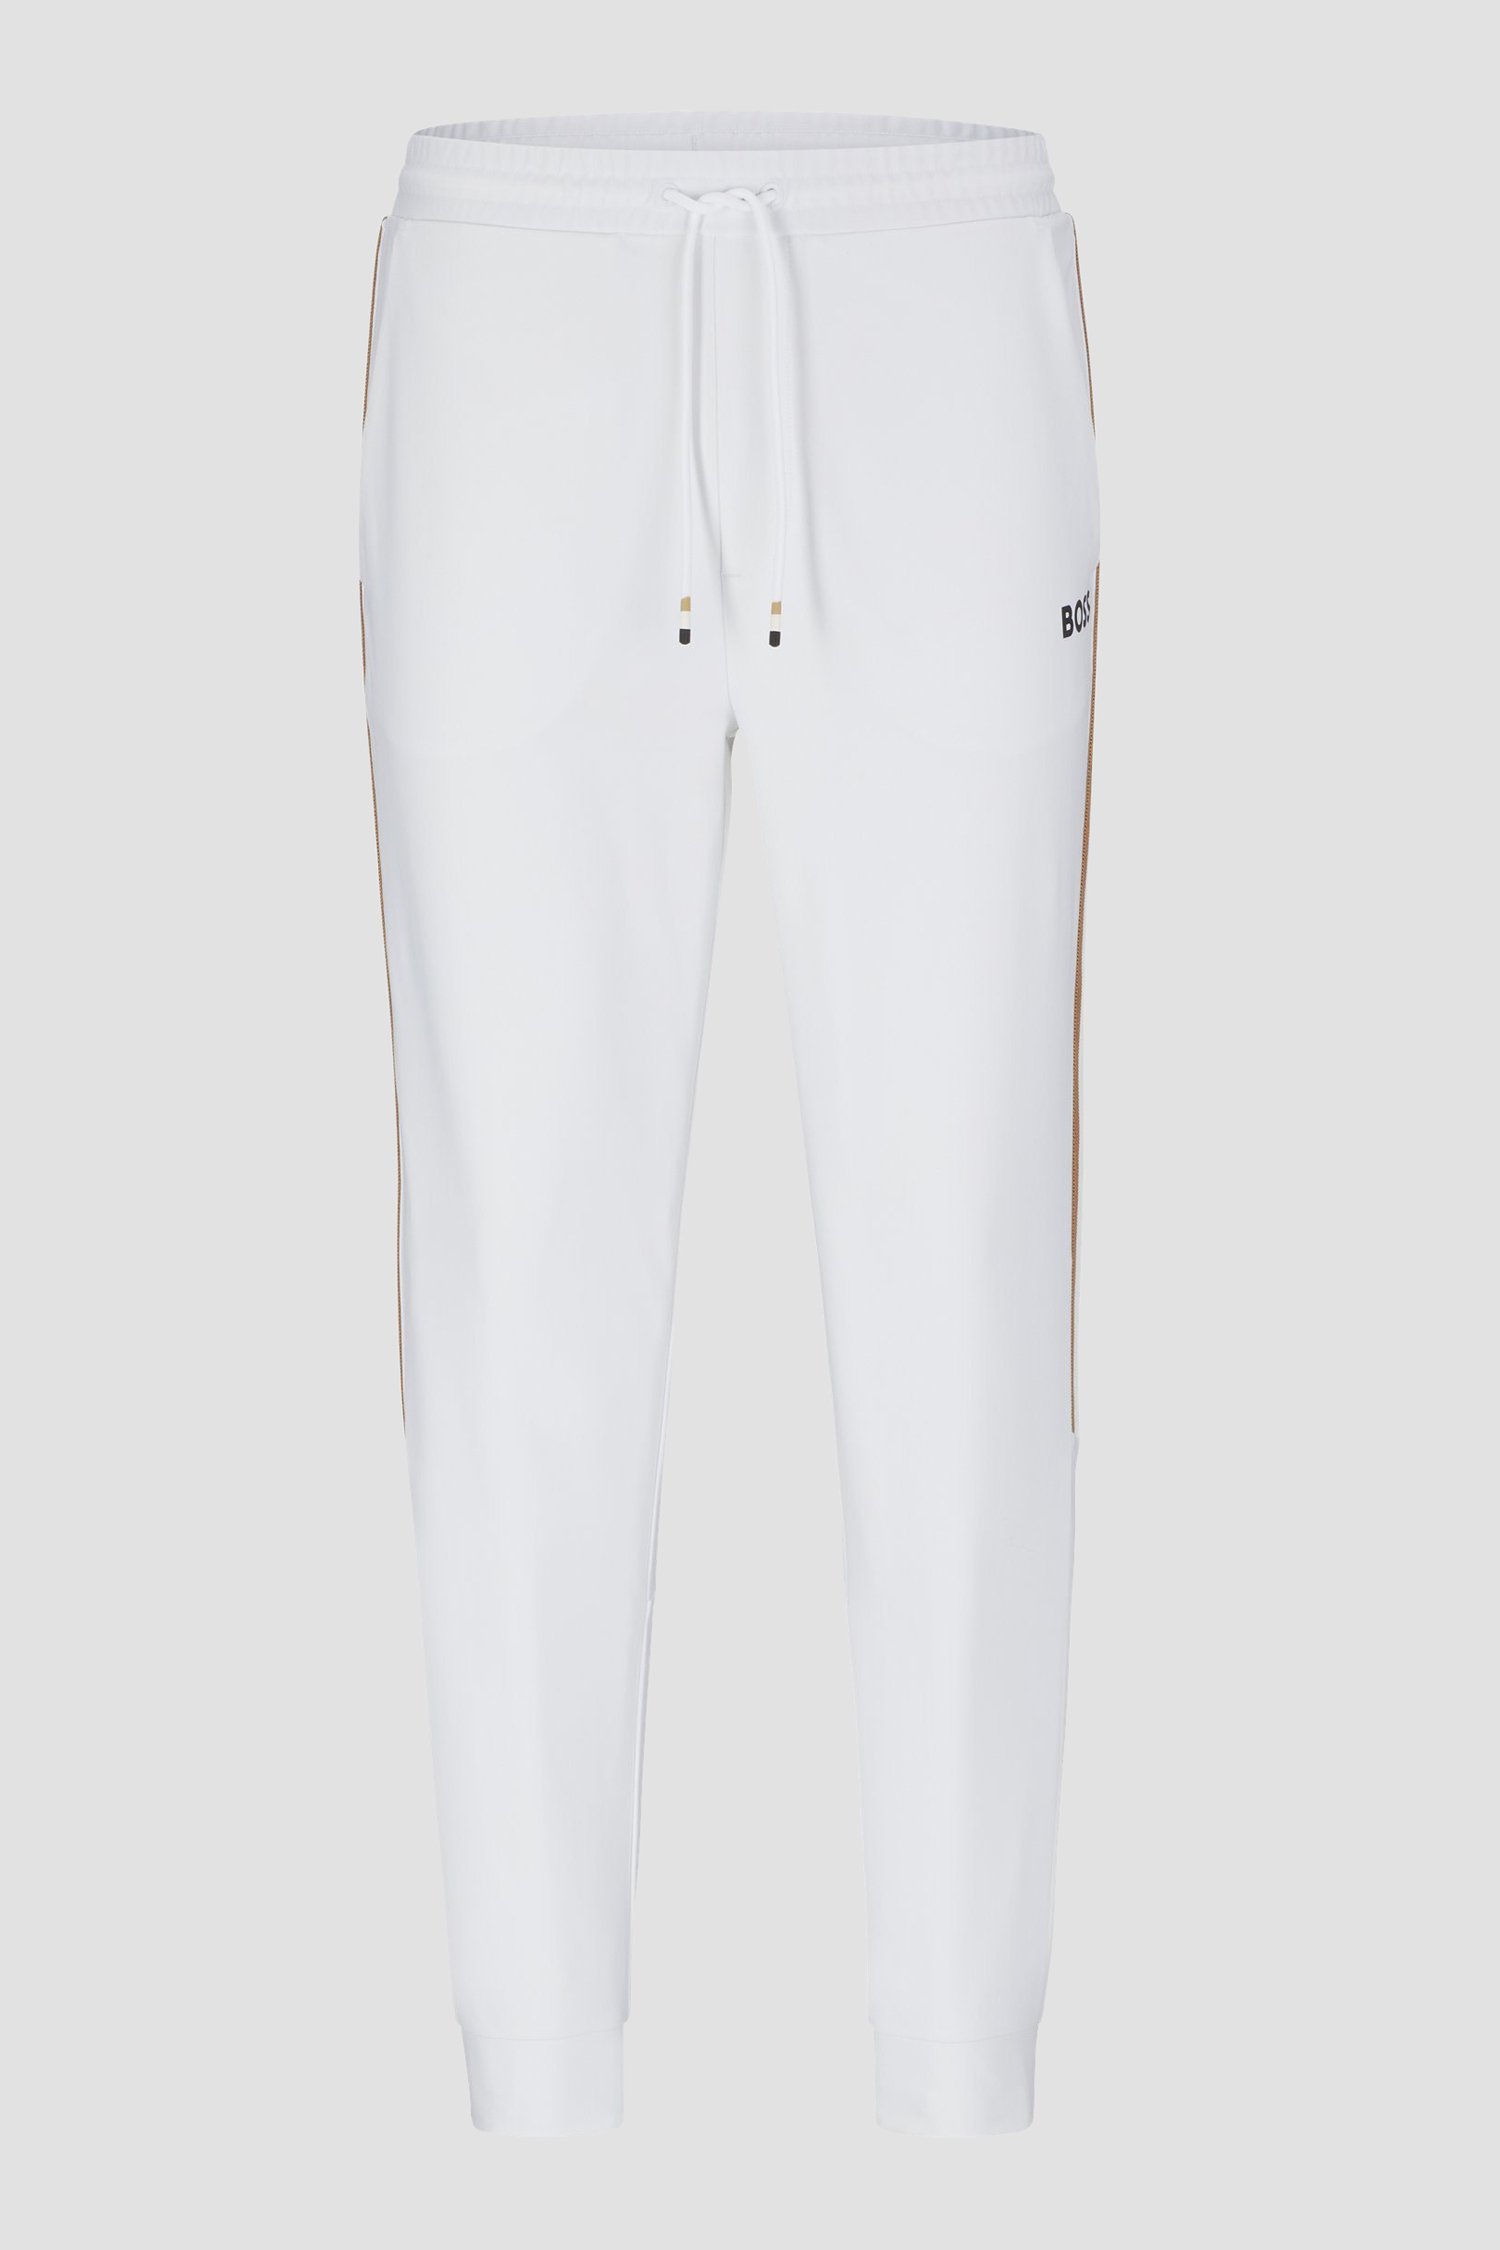 Мужские белые спортивные брюки BOSS X Matteo Berrettini 1